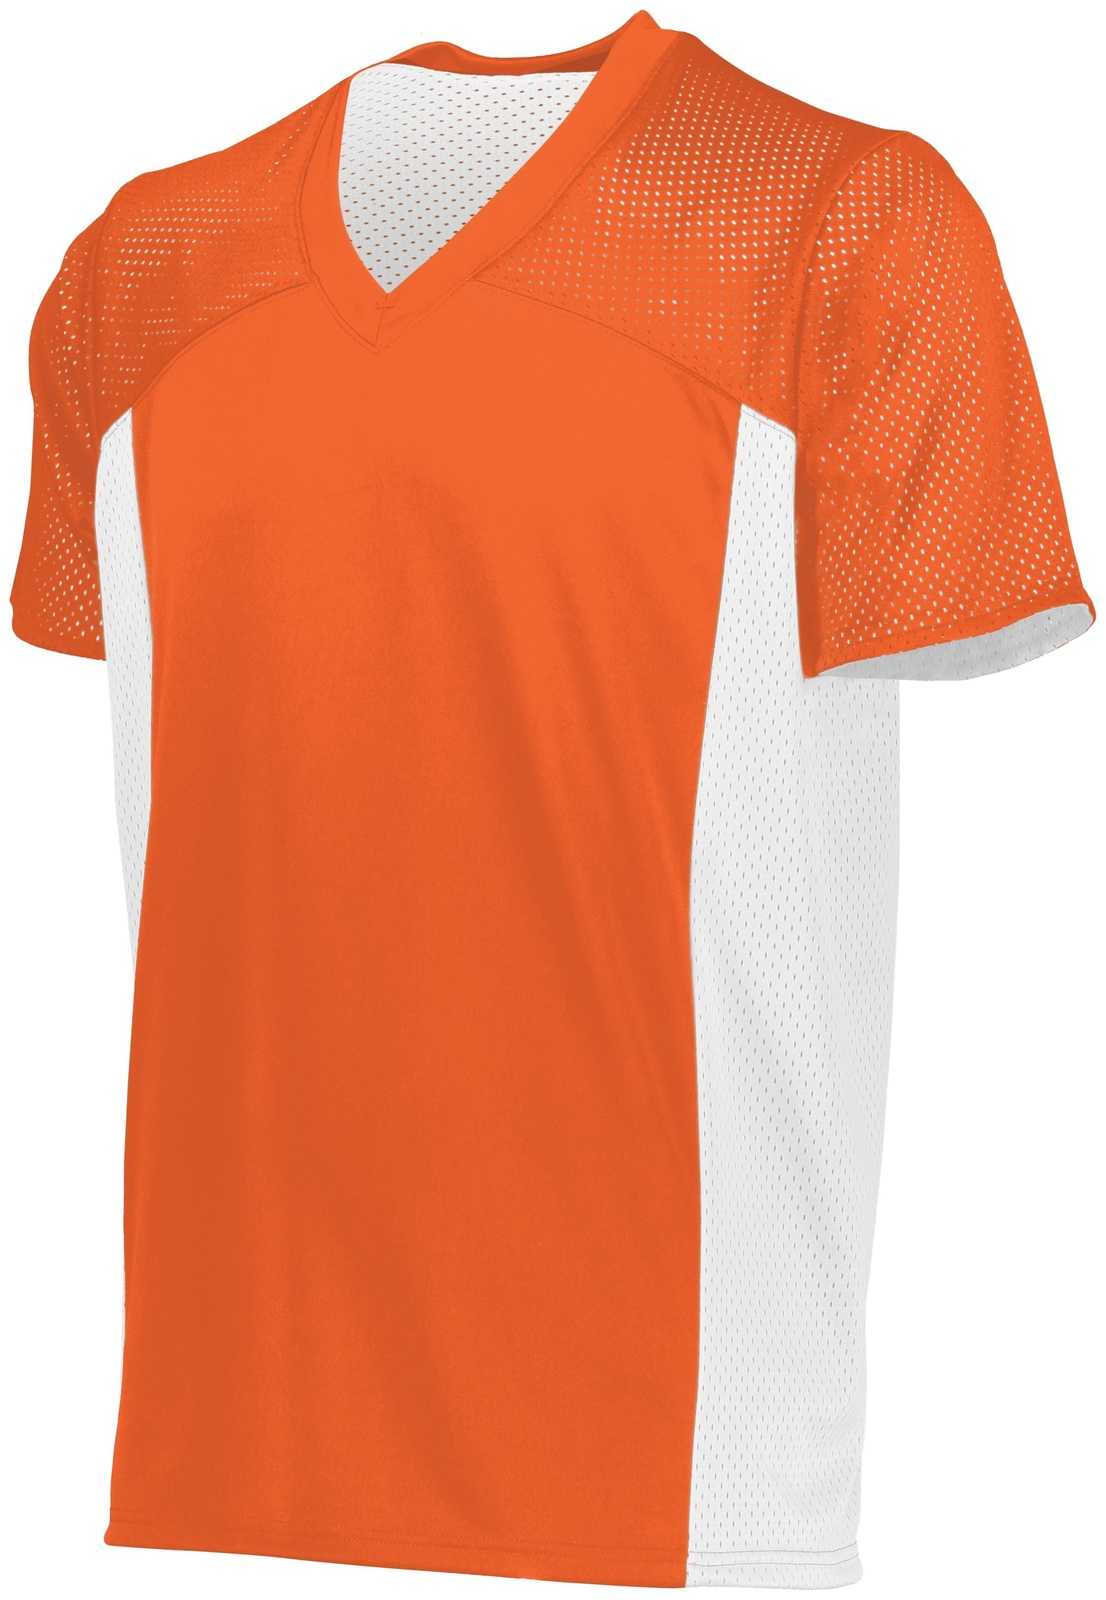 Augusta 264 Reversible Flag Football Jersey - Orange White - HIT a Double